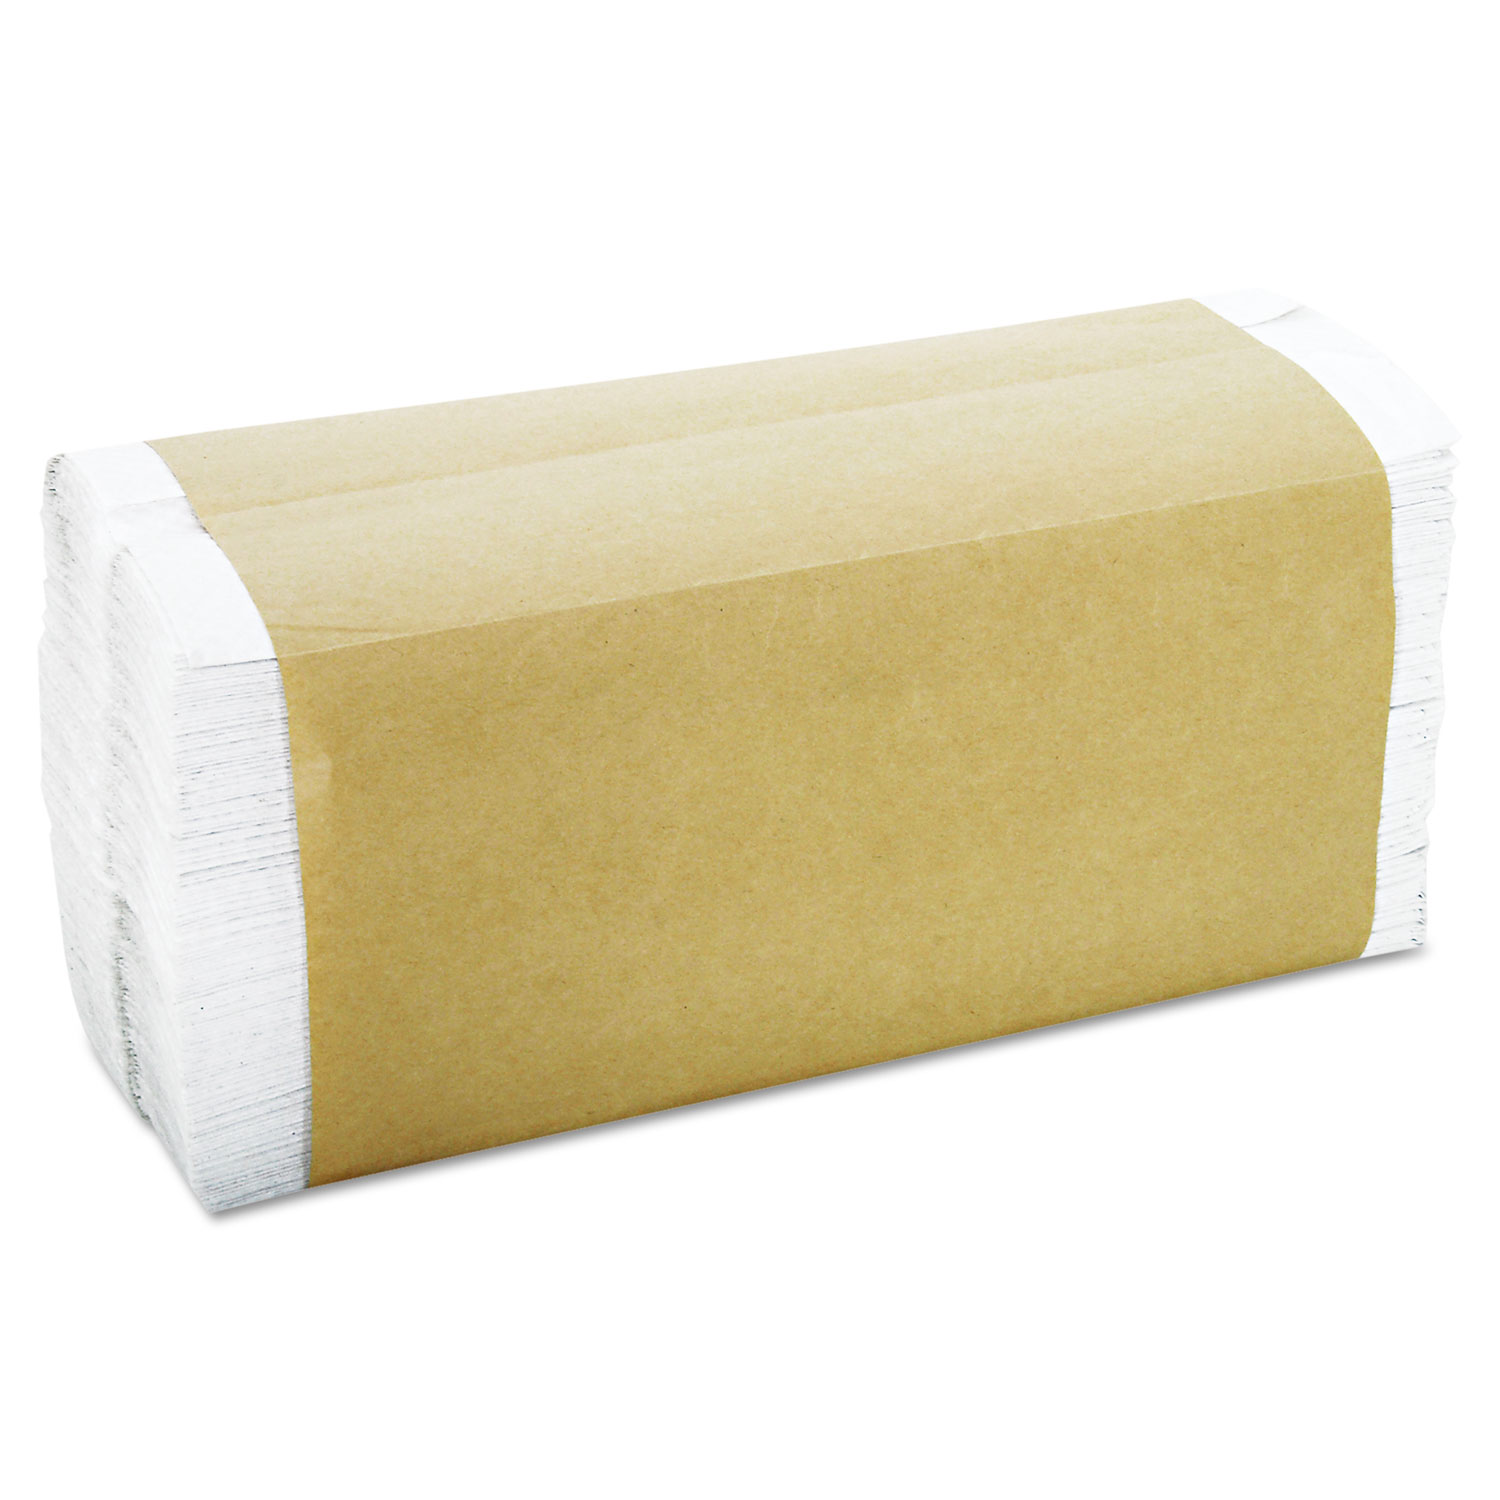 C-Fold Towels, 10 x 12, White, 200/Pack, 12 Packs/Carton